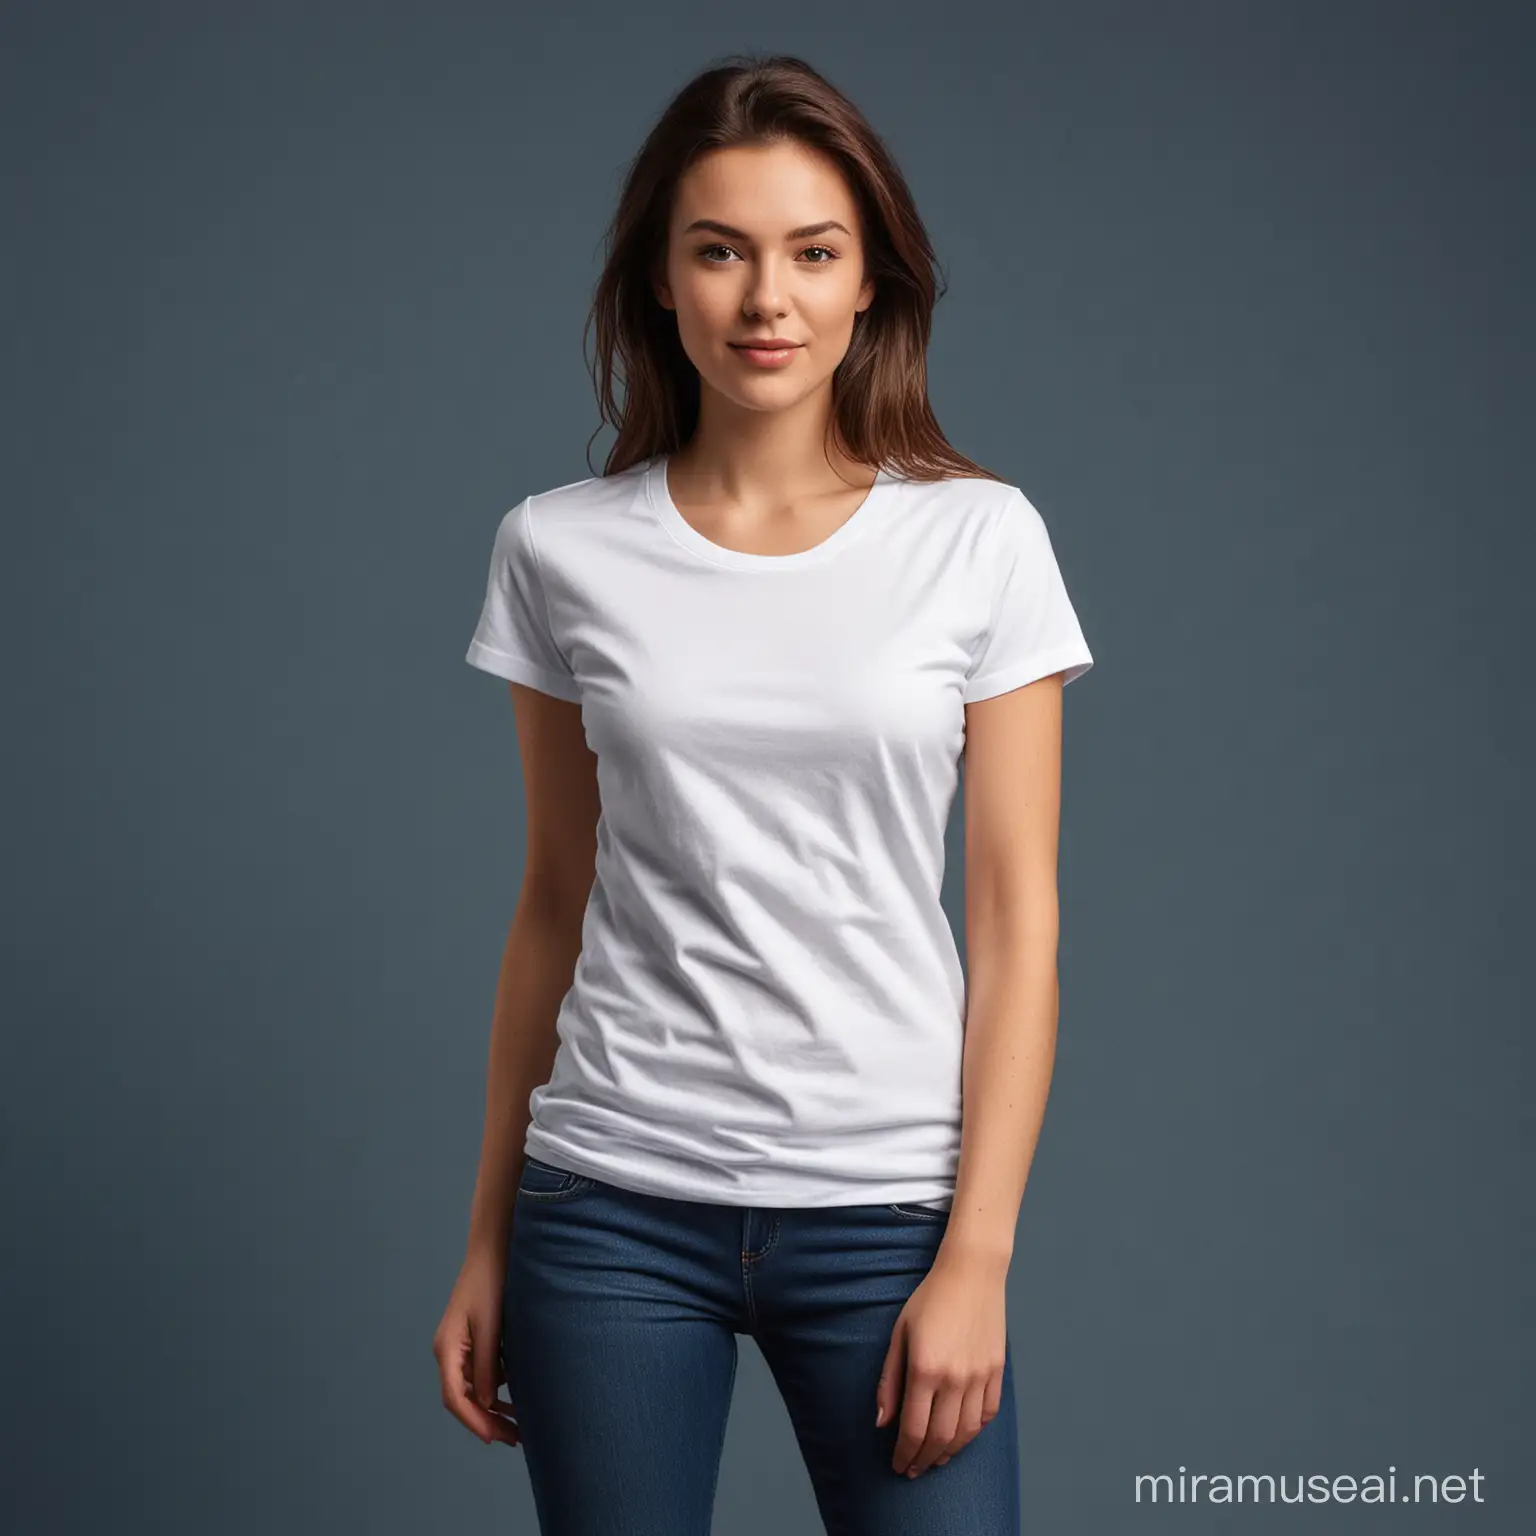 Elegant Female Model in White TShirt against Navy Background